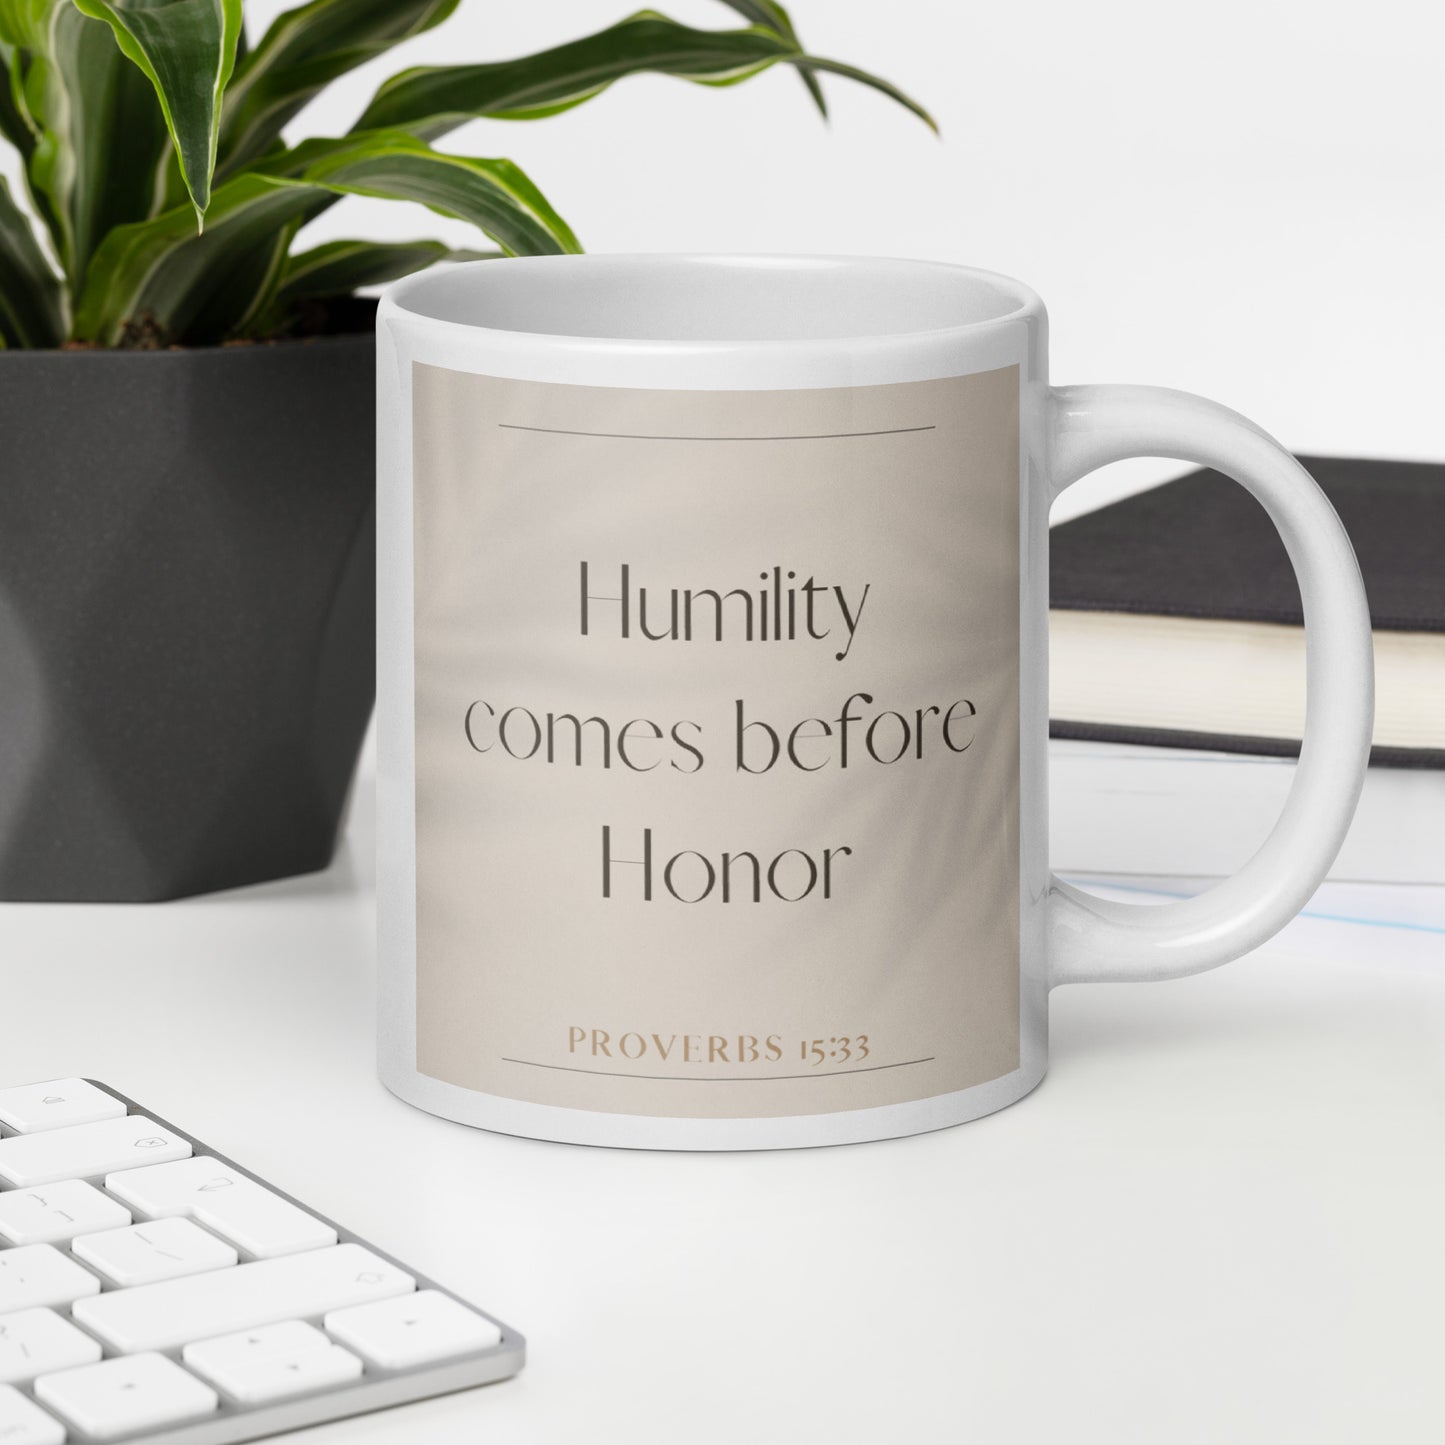 Proverbs 15:33 Elegant White glossy mug